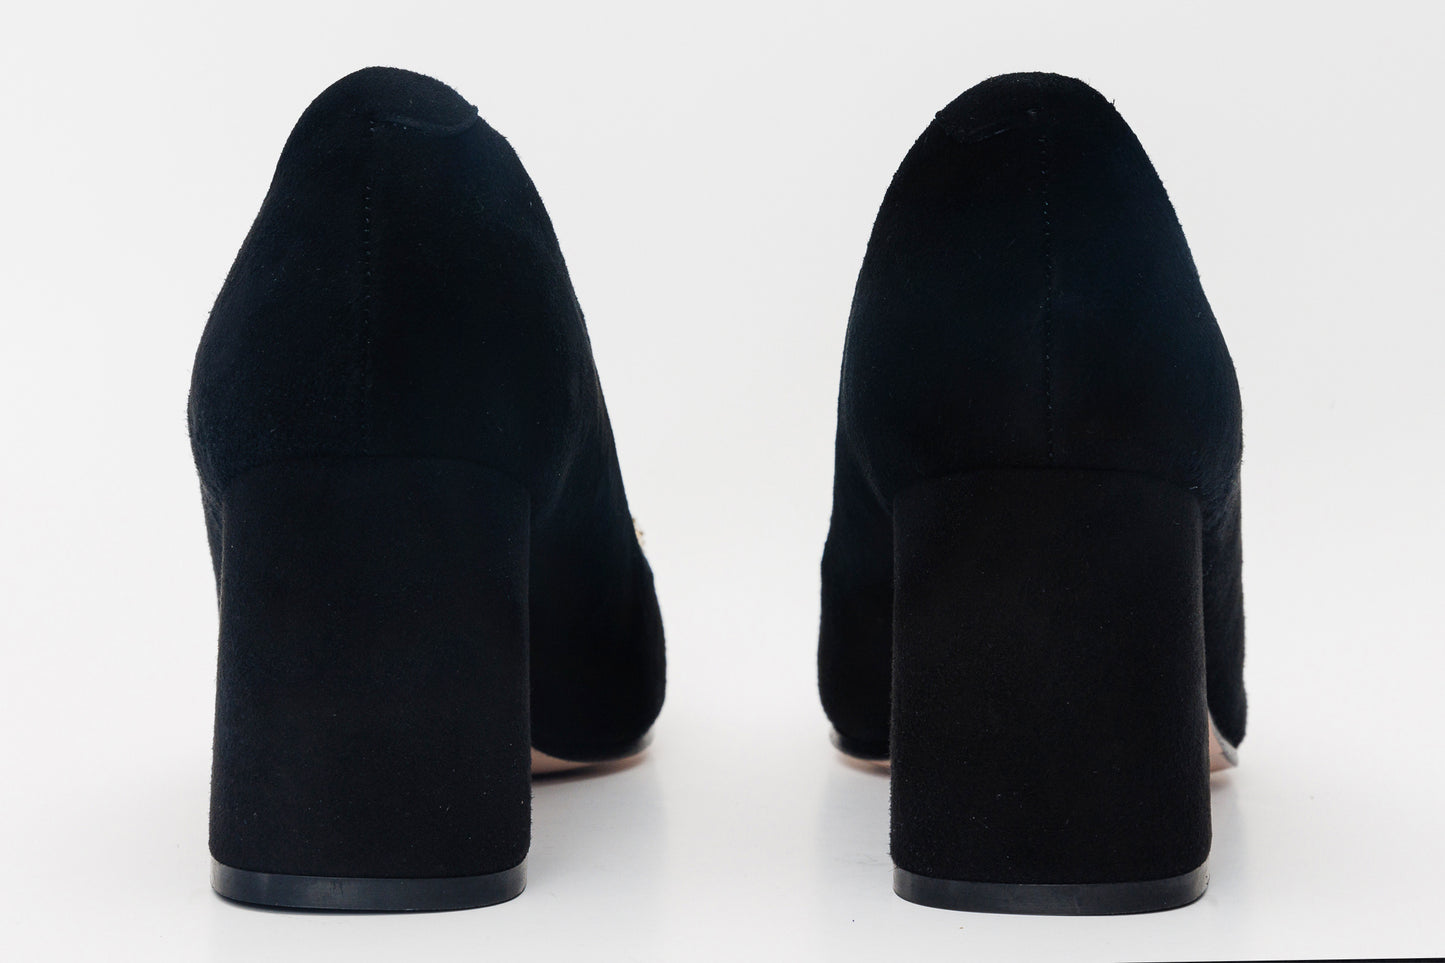 The California Black Suede Leather Block Heel Pump Women Shoe